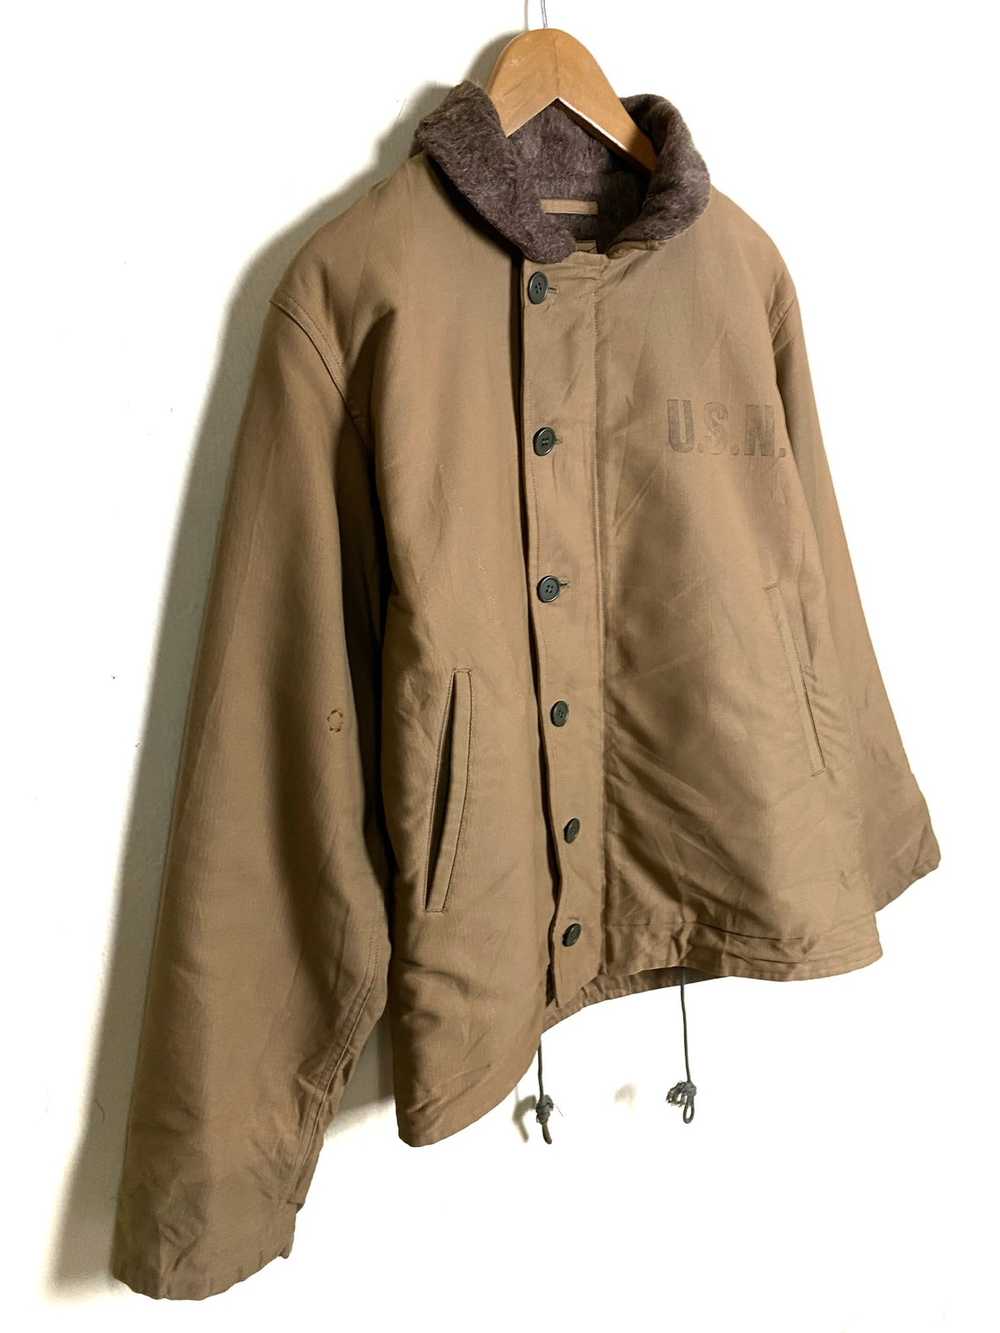 Buzz Rickson's - Vintage N-1 USN Deck Jacket - image 5